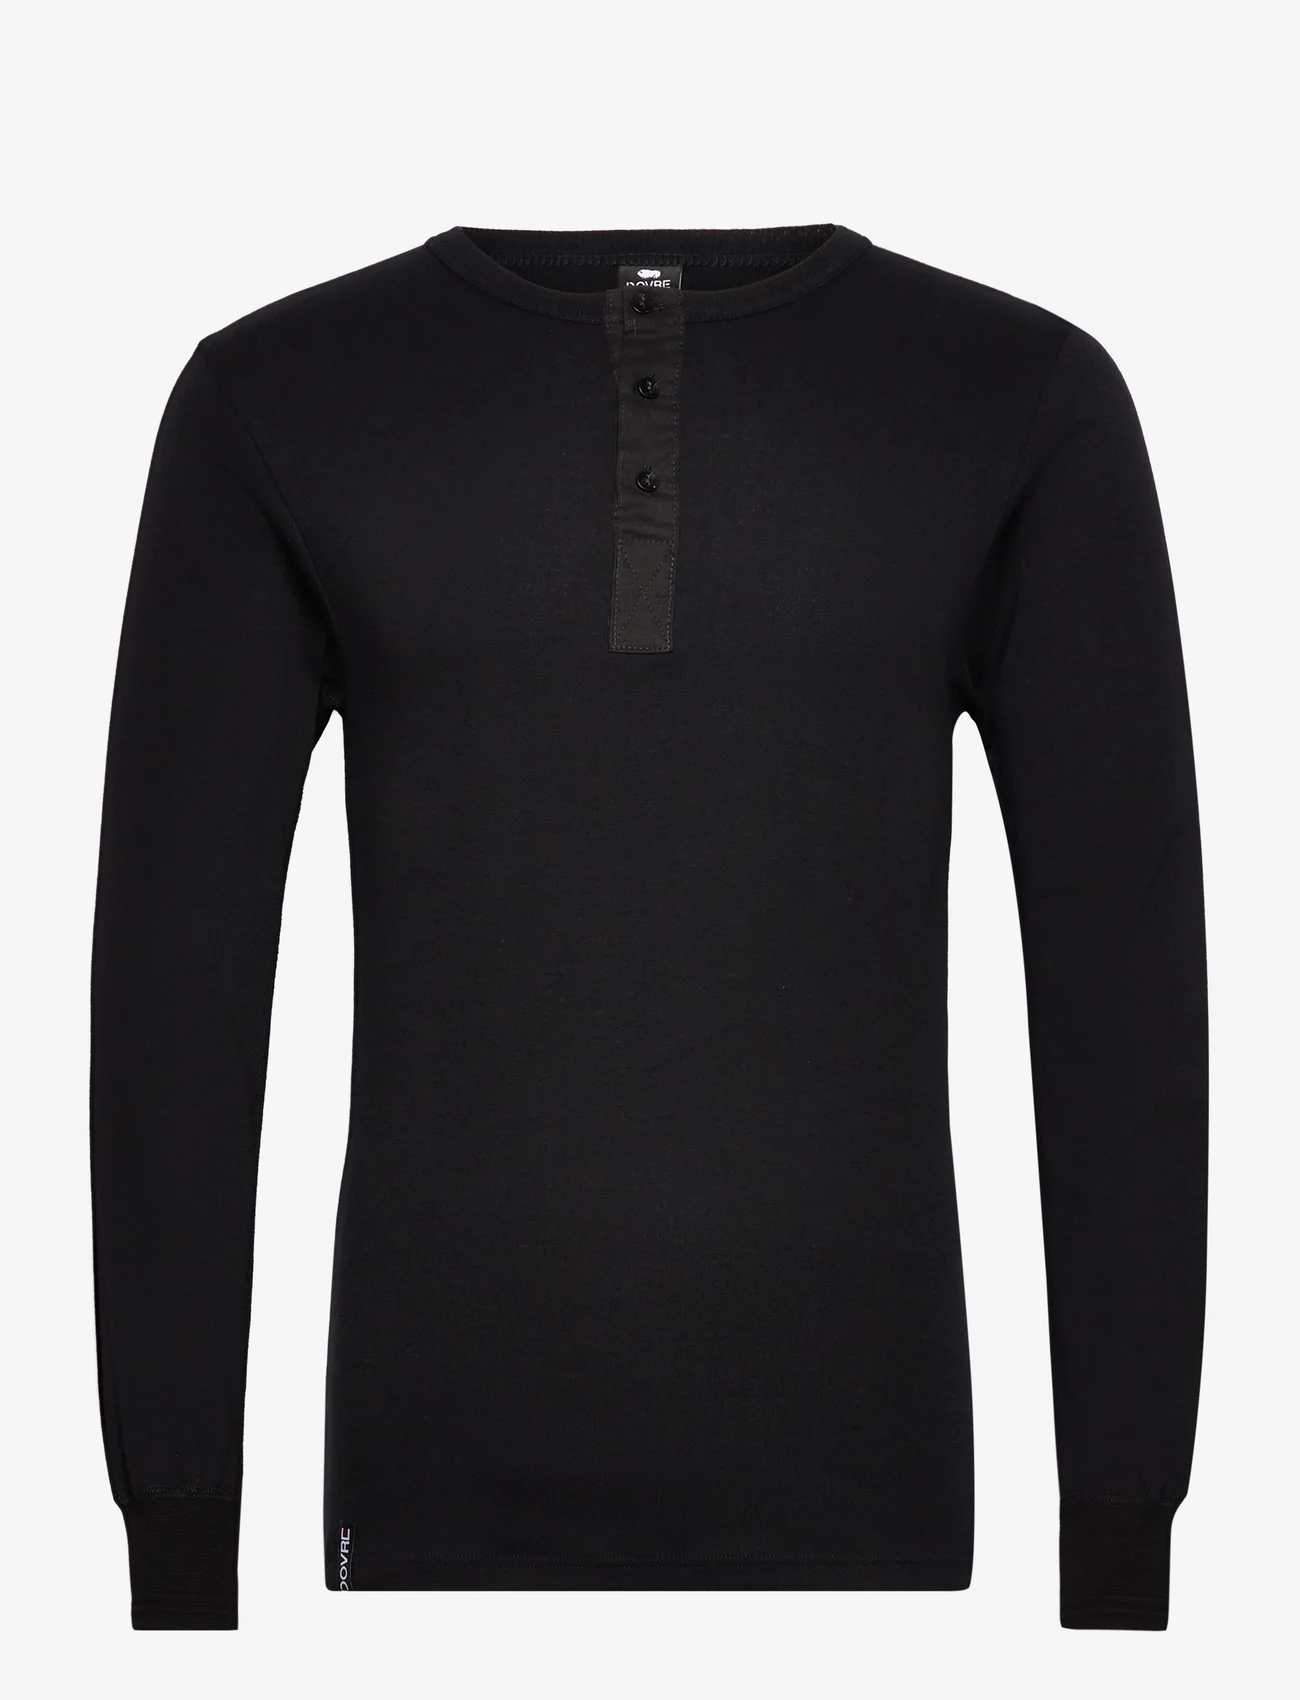 Dovre - Dovre T-Shirt 1/1 ærme/stolpe - pyjama tops - black - 0